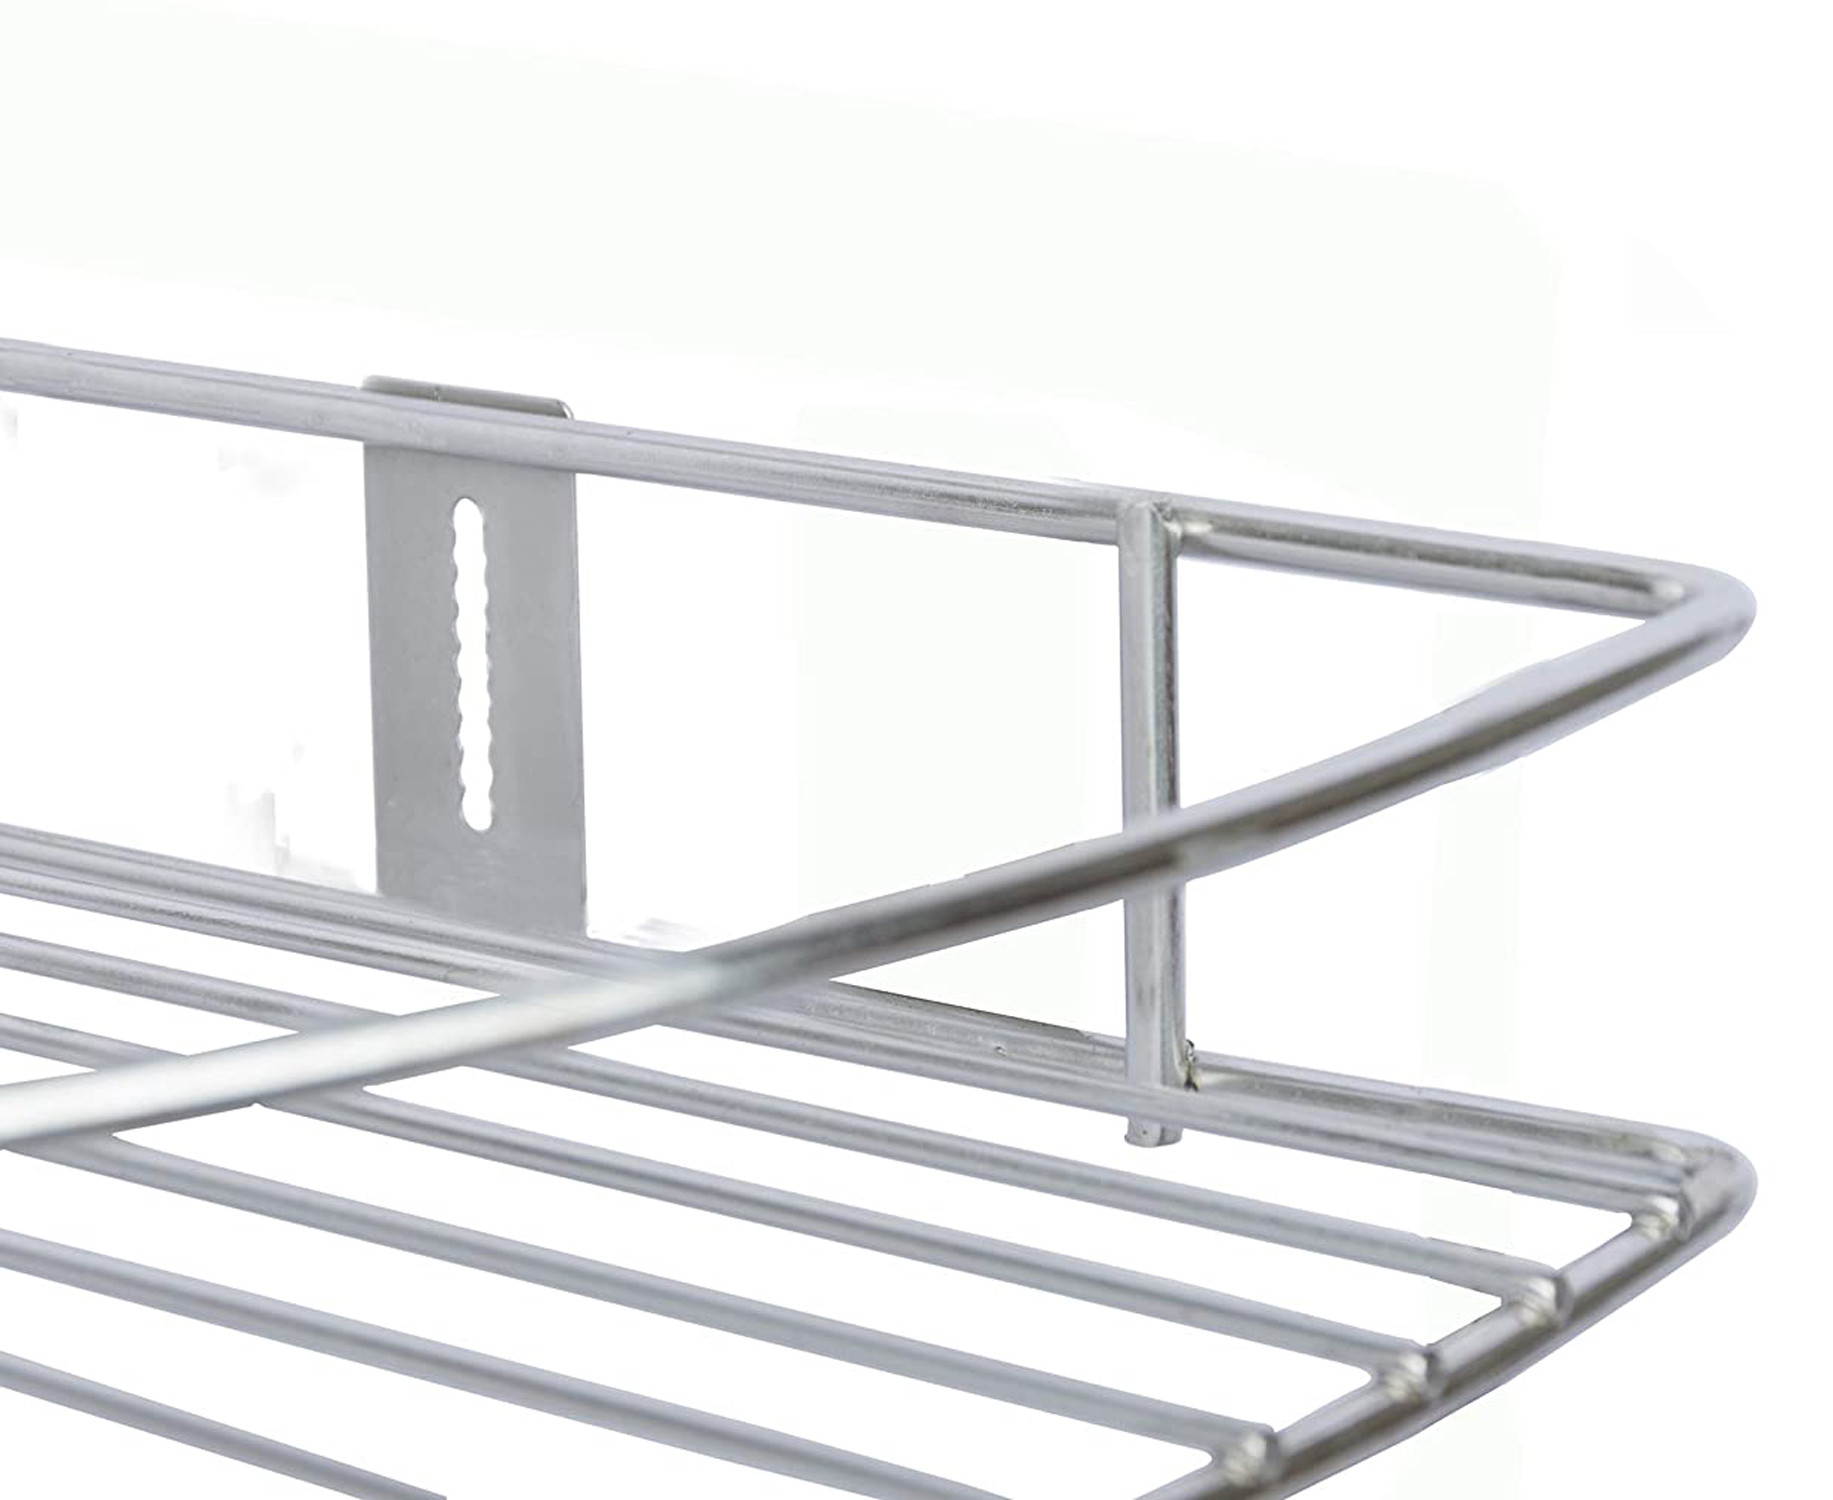 Kuber Industries Multipurpose Stainless Steel 1-Layer Corner Storage Rack/Shelf - Kitchen and Bathroom (Silver)